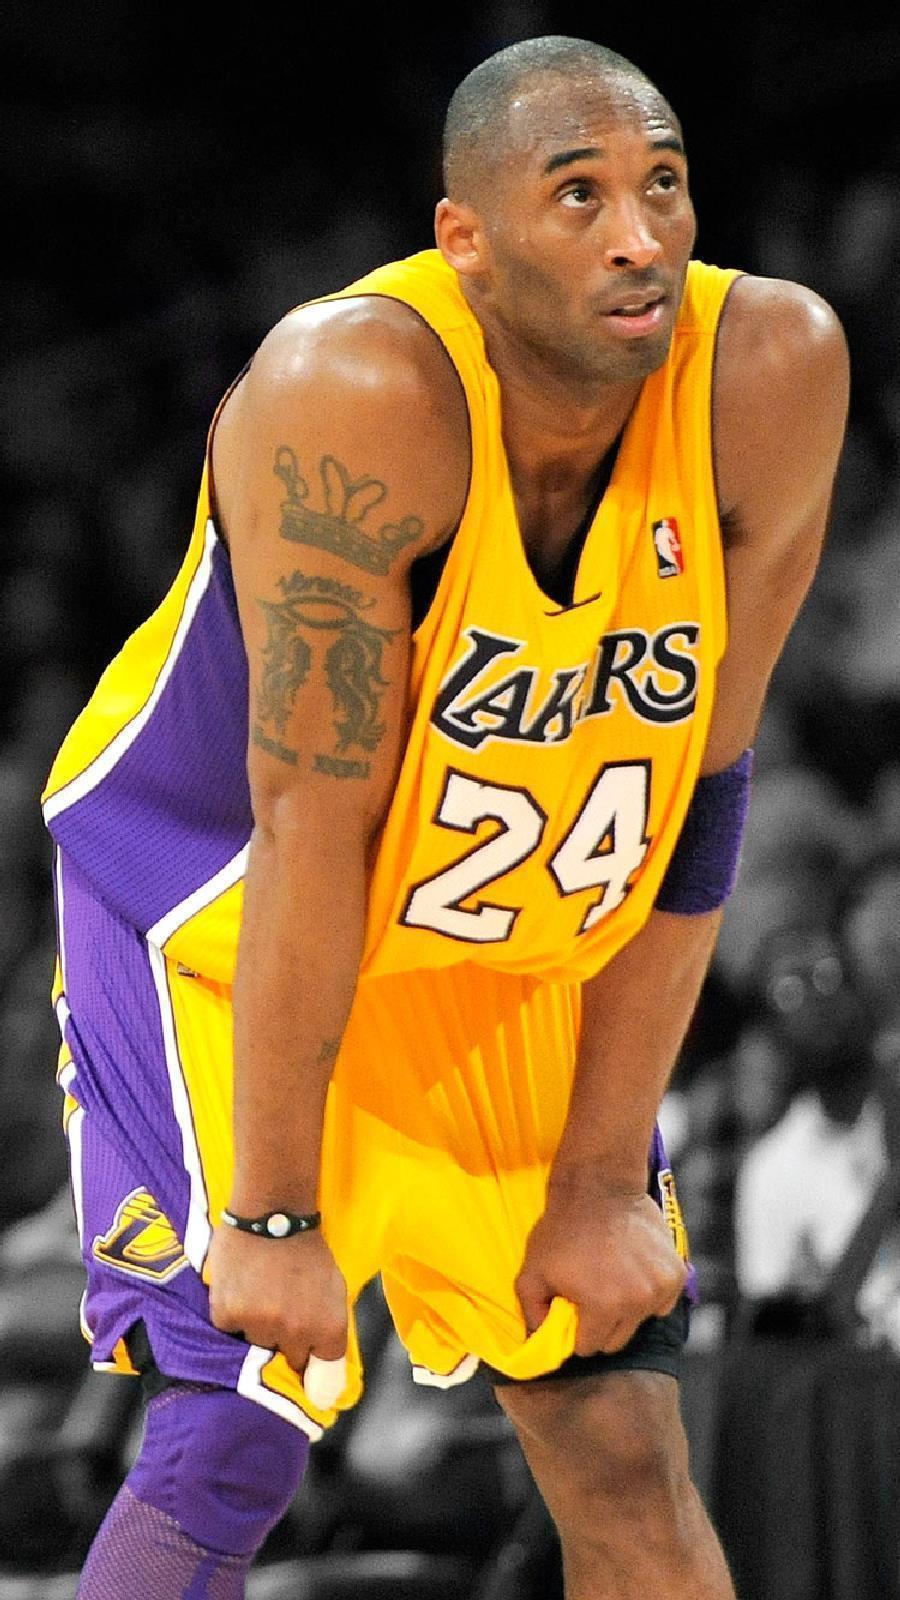 Lakers 24 Kobe Bryant Android Wallpaper